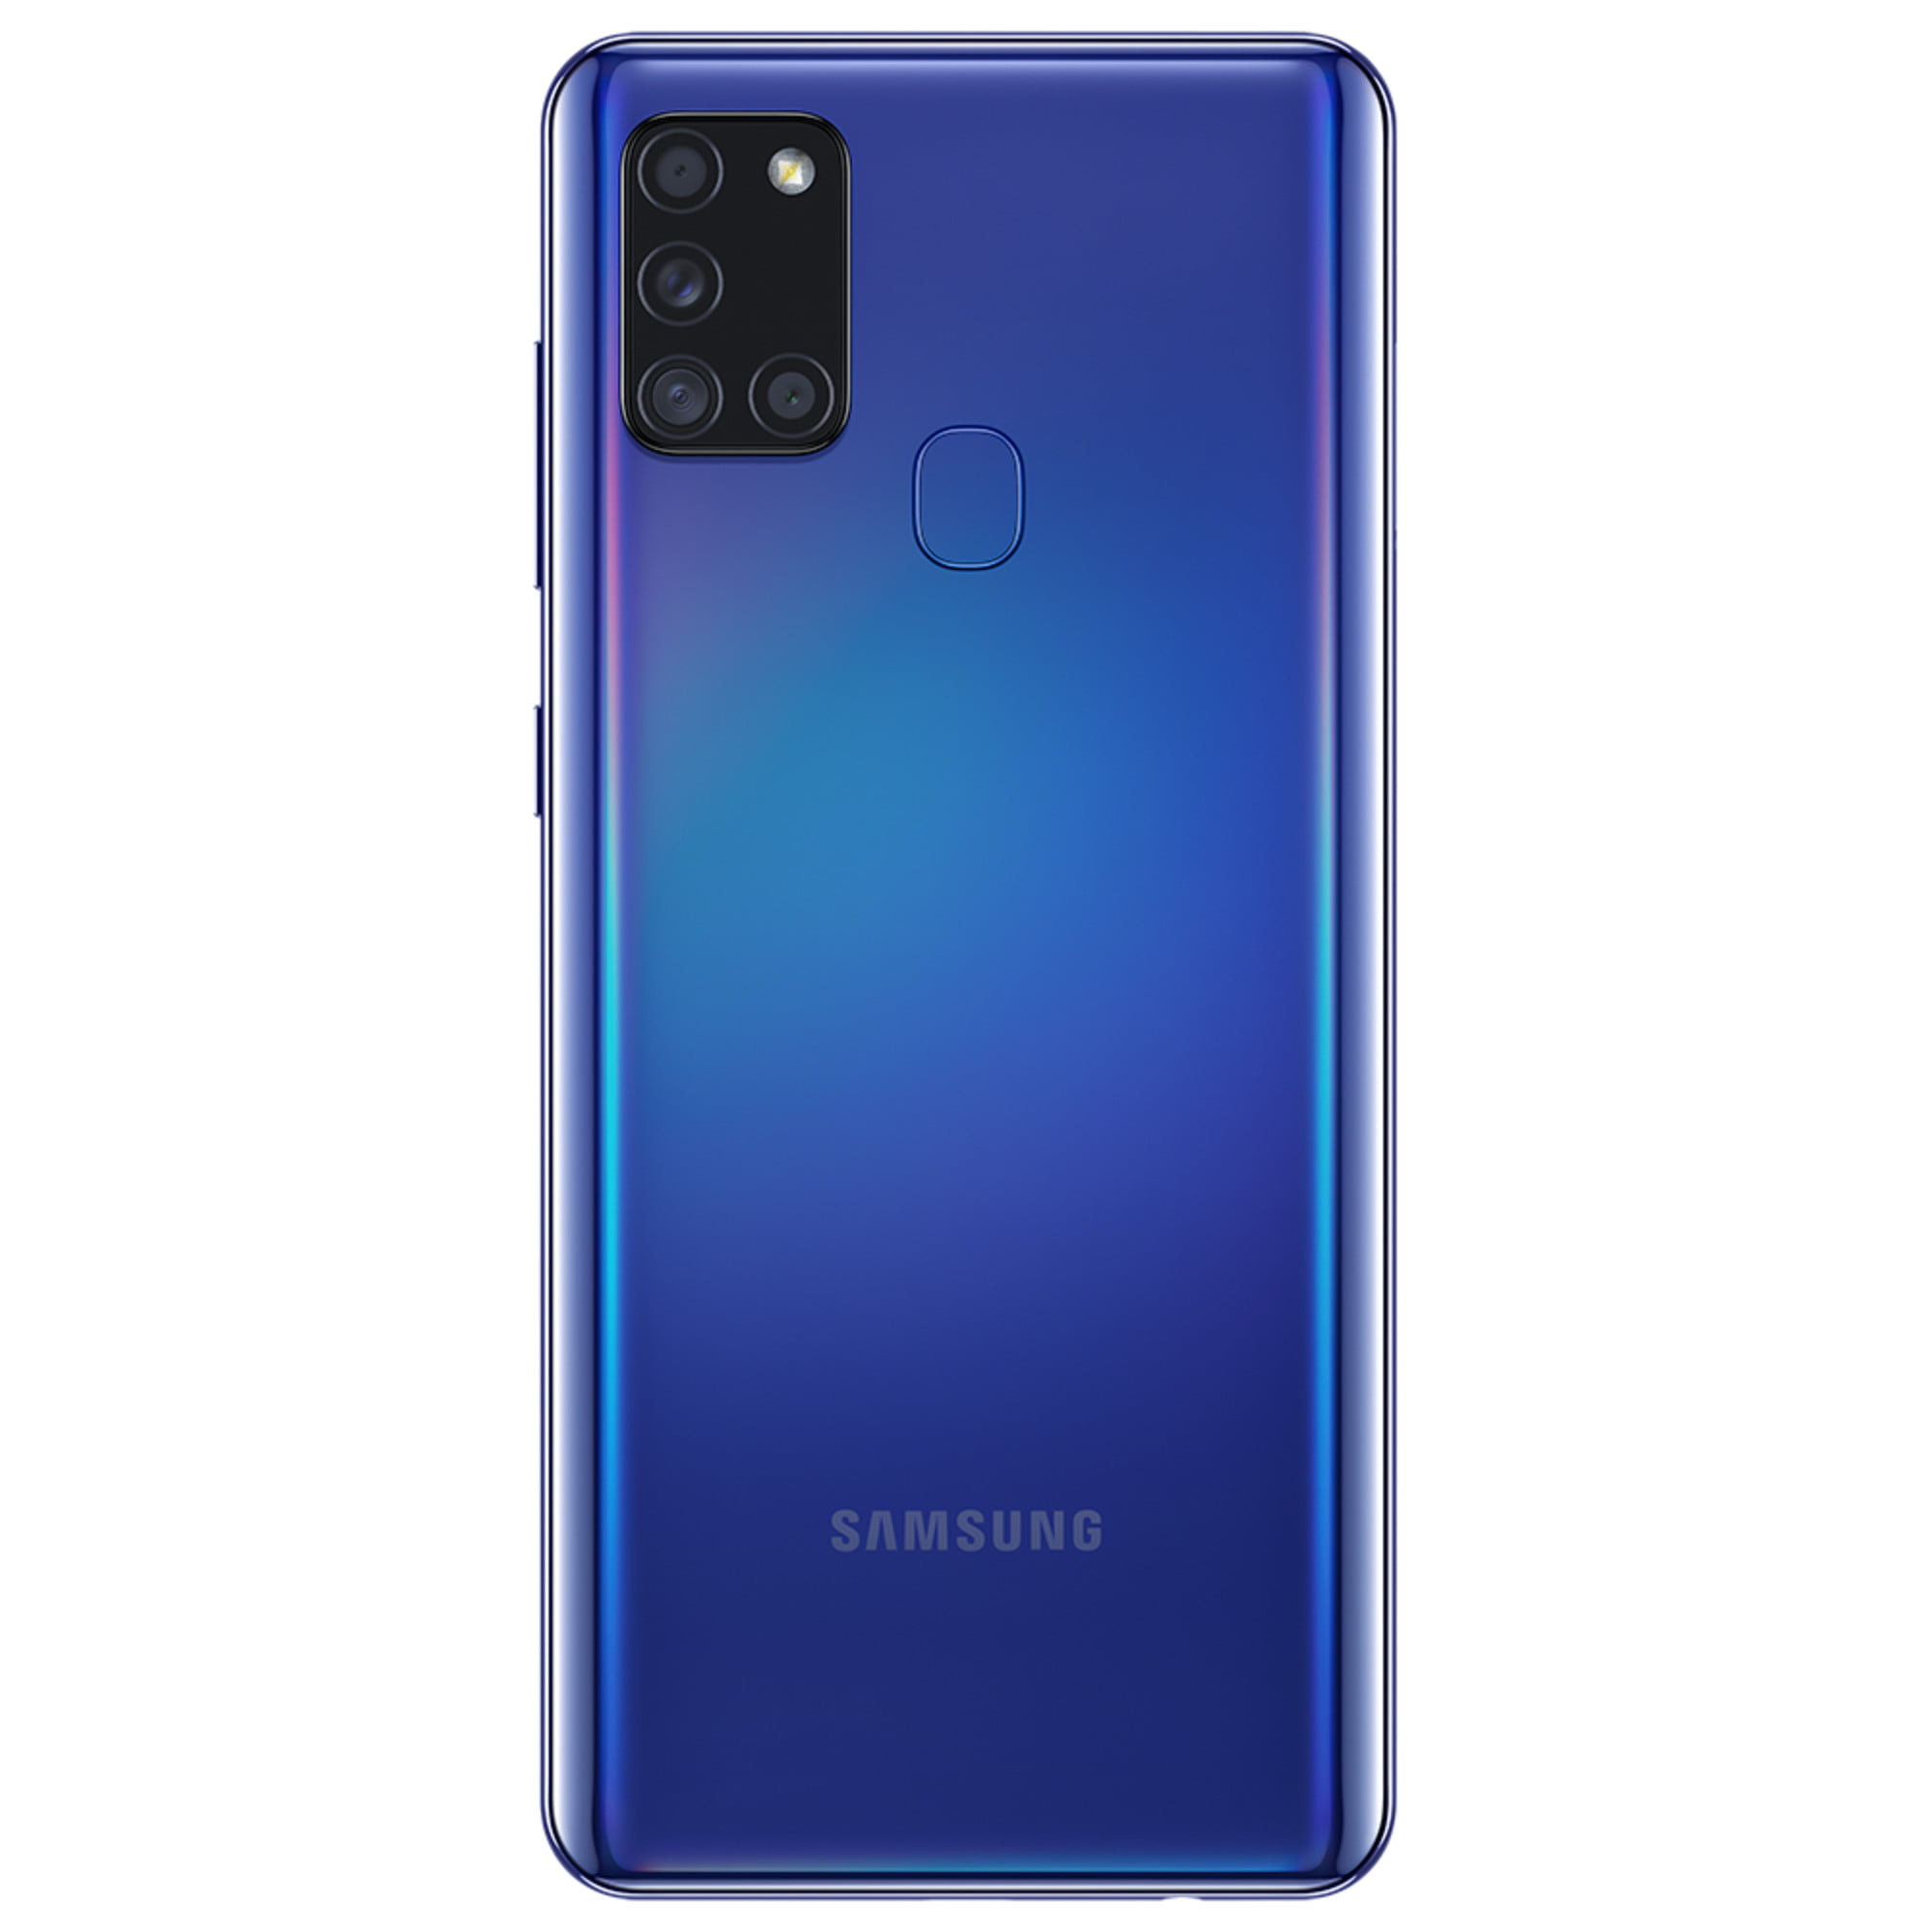 Pristojan Lako se dogoditi domena  Samsung Galaxy A21s A217M 64GB Dual SIM GSM Unlocked Android SmartPhone  (International Variant/US Compatible LTE) - Blue - Walmart.com